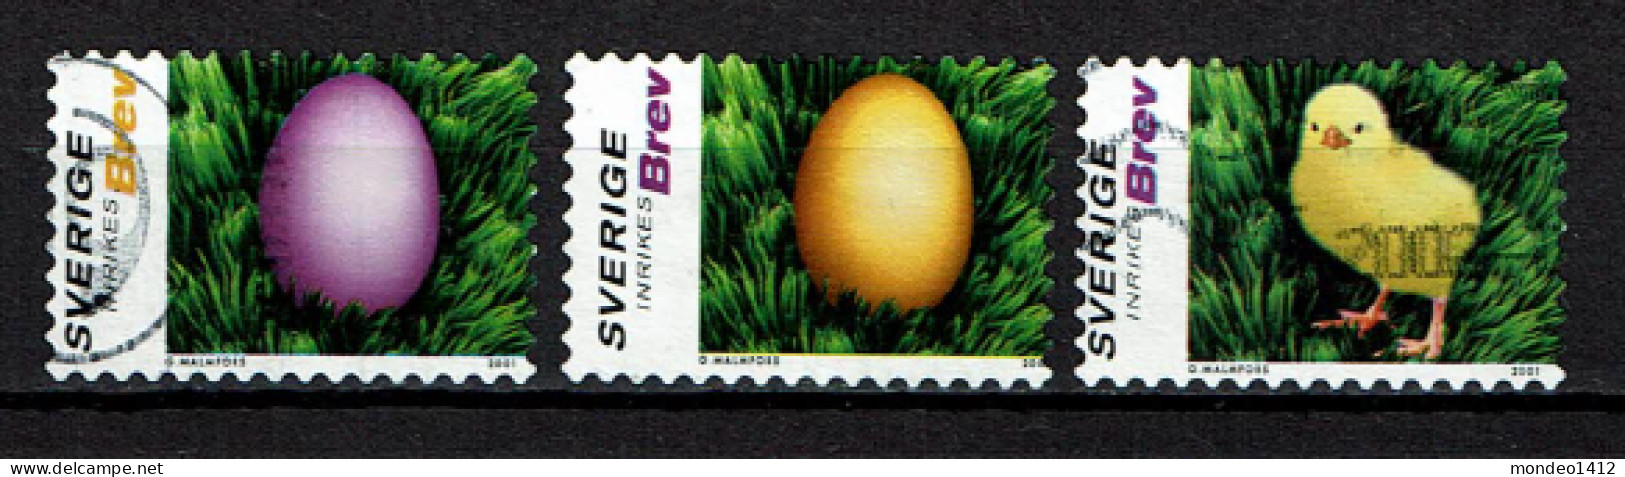 Sweden 2001 - Easter, Ostern, Pasen - Used - Gebruikt